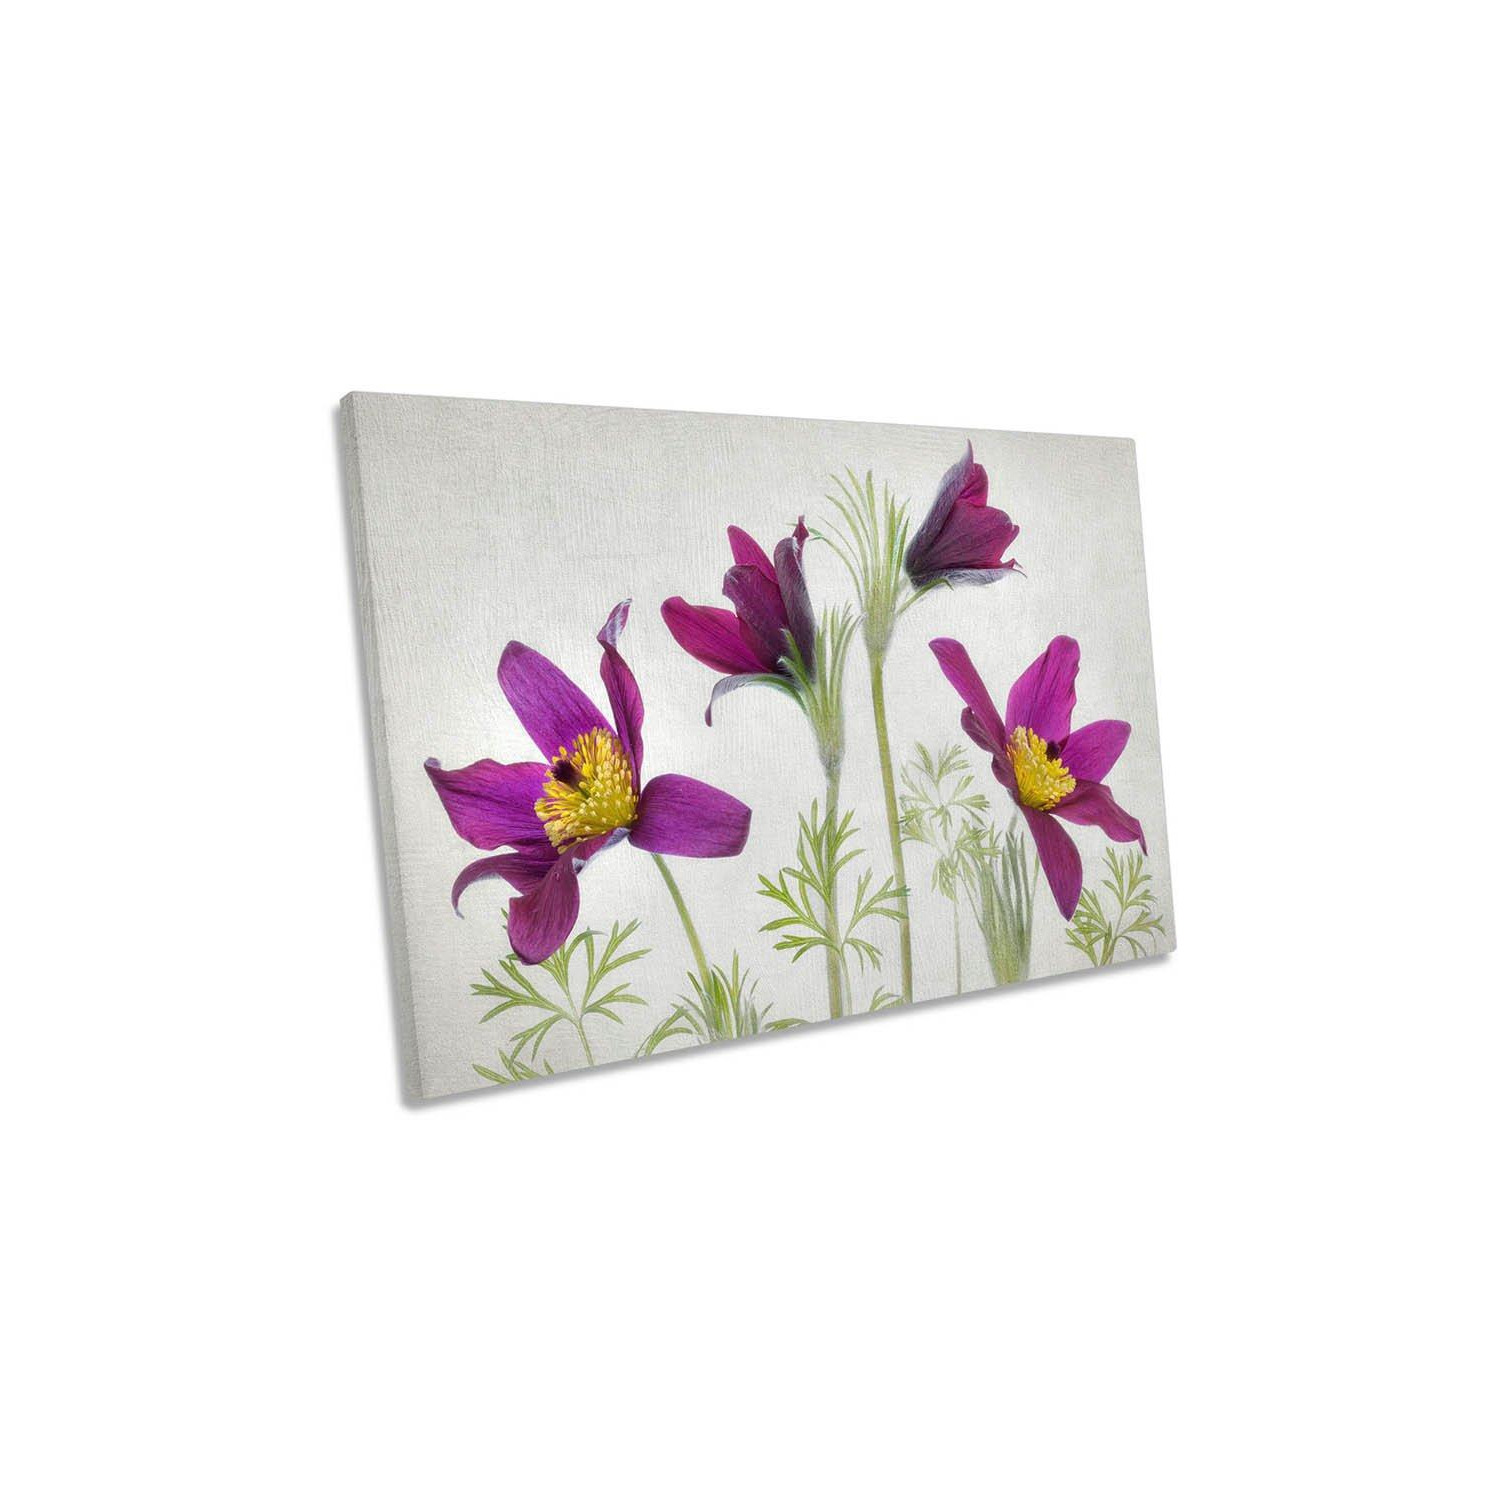 Pulsatilla Purple Flower Floral Spring Canvas Wall Art Picture Print - image 1